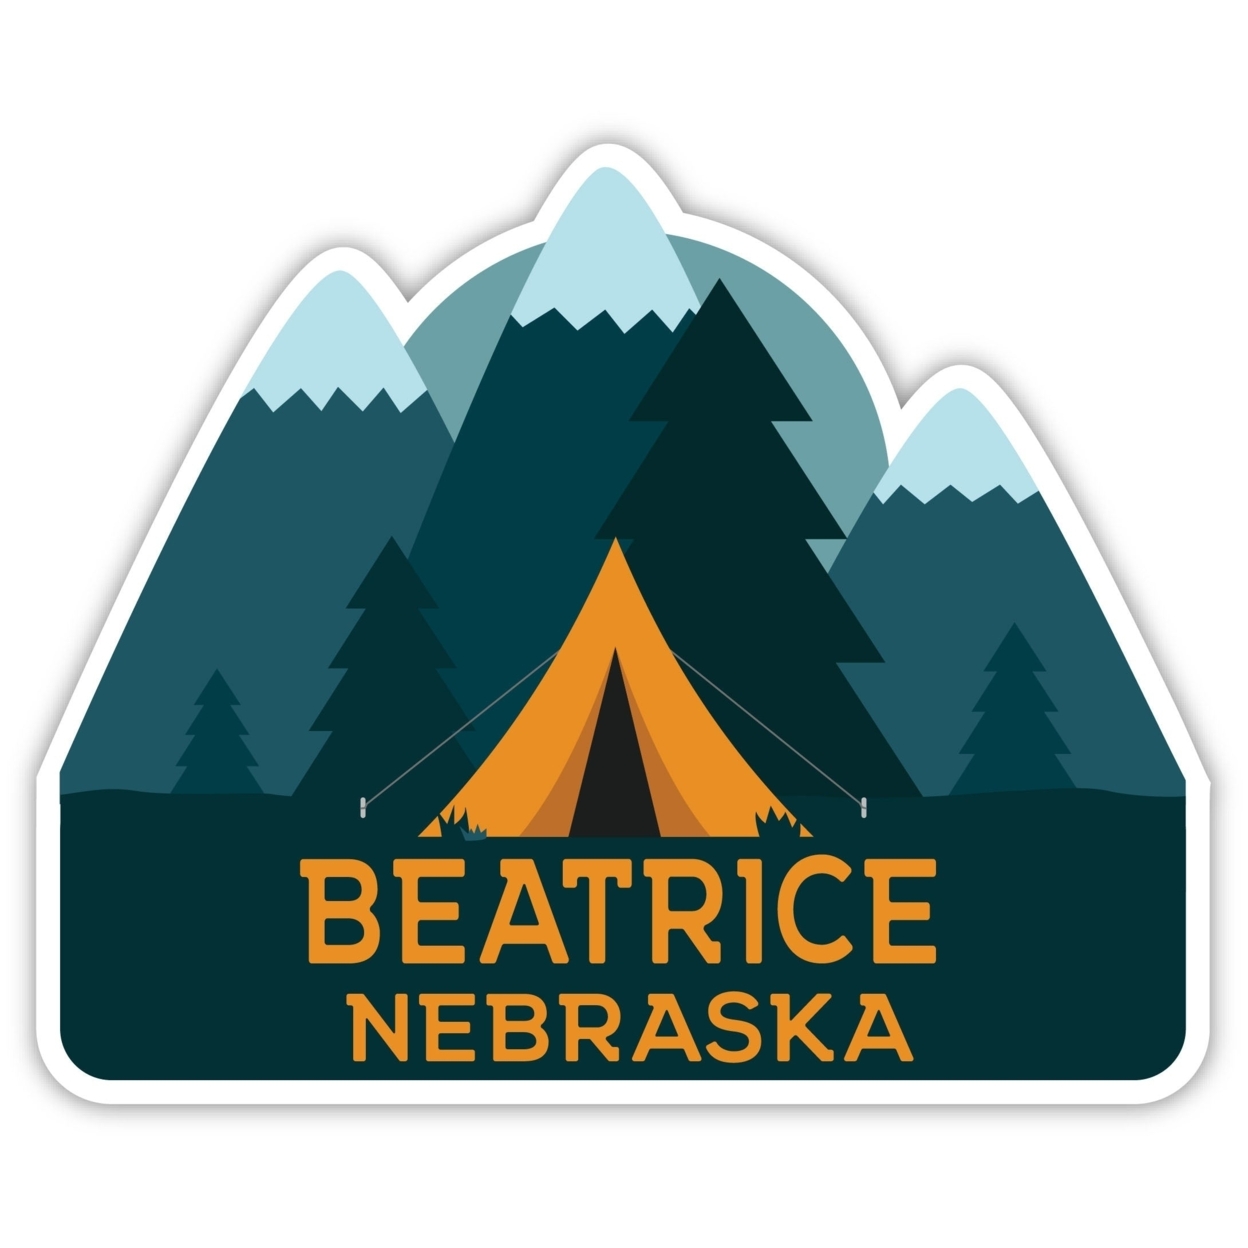 Beatrice Nebraska Souvenir Decorative Stickers (Choose Theme And Size) - 4-Pack, 2-Inch, Tent